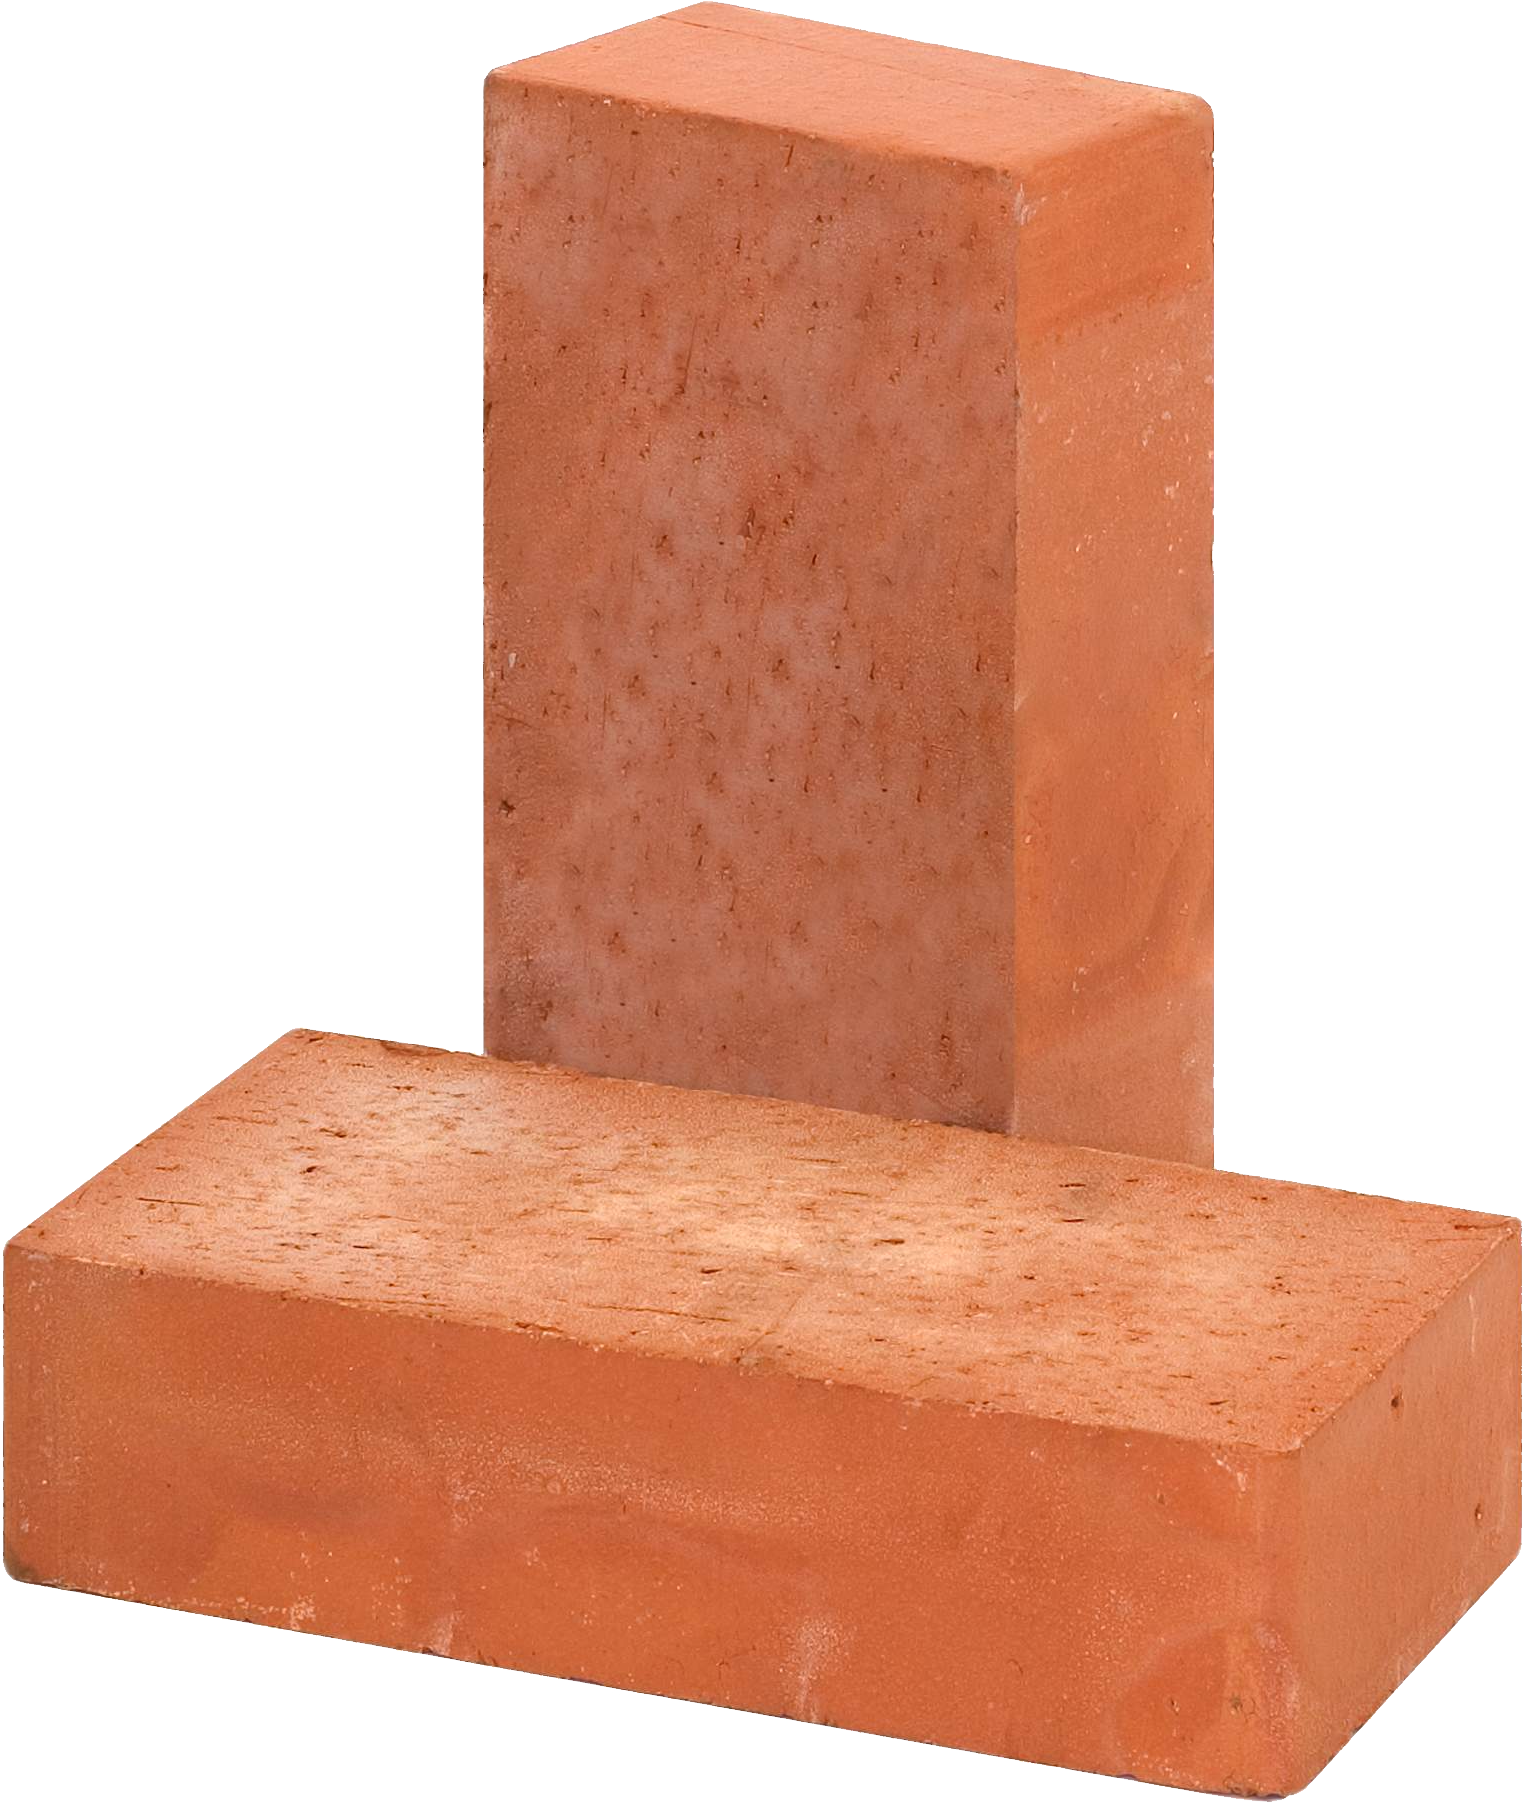 Brick clipart plain. Bricks thirteen isolated stock